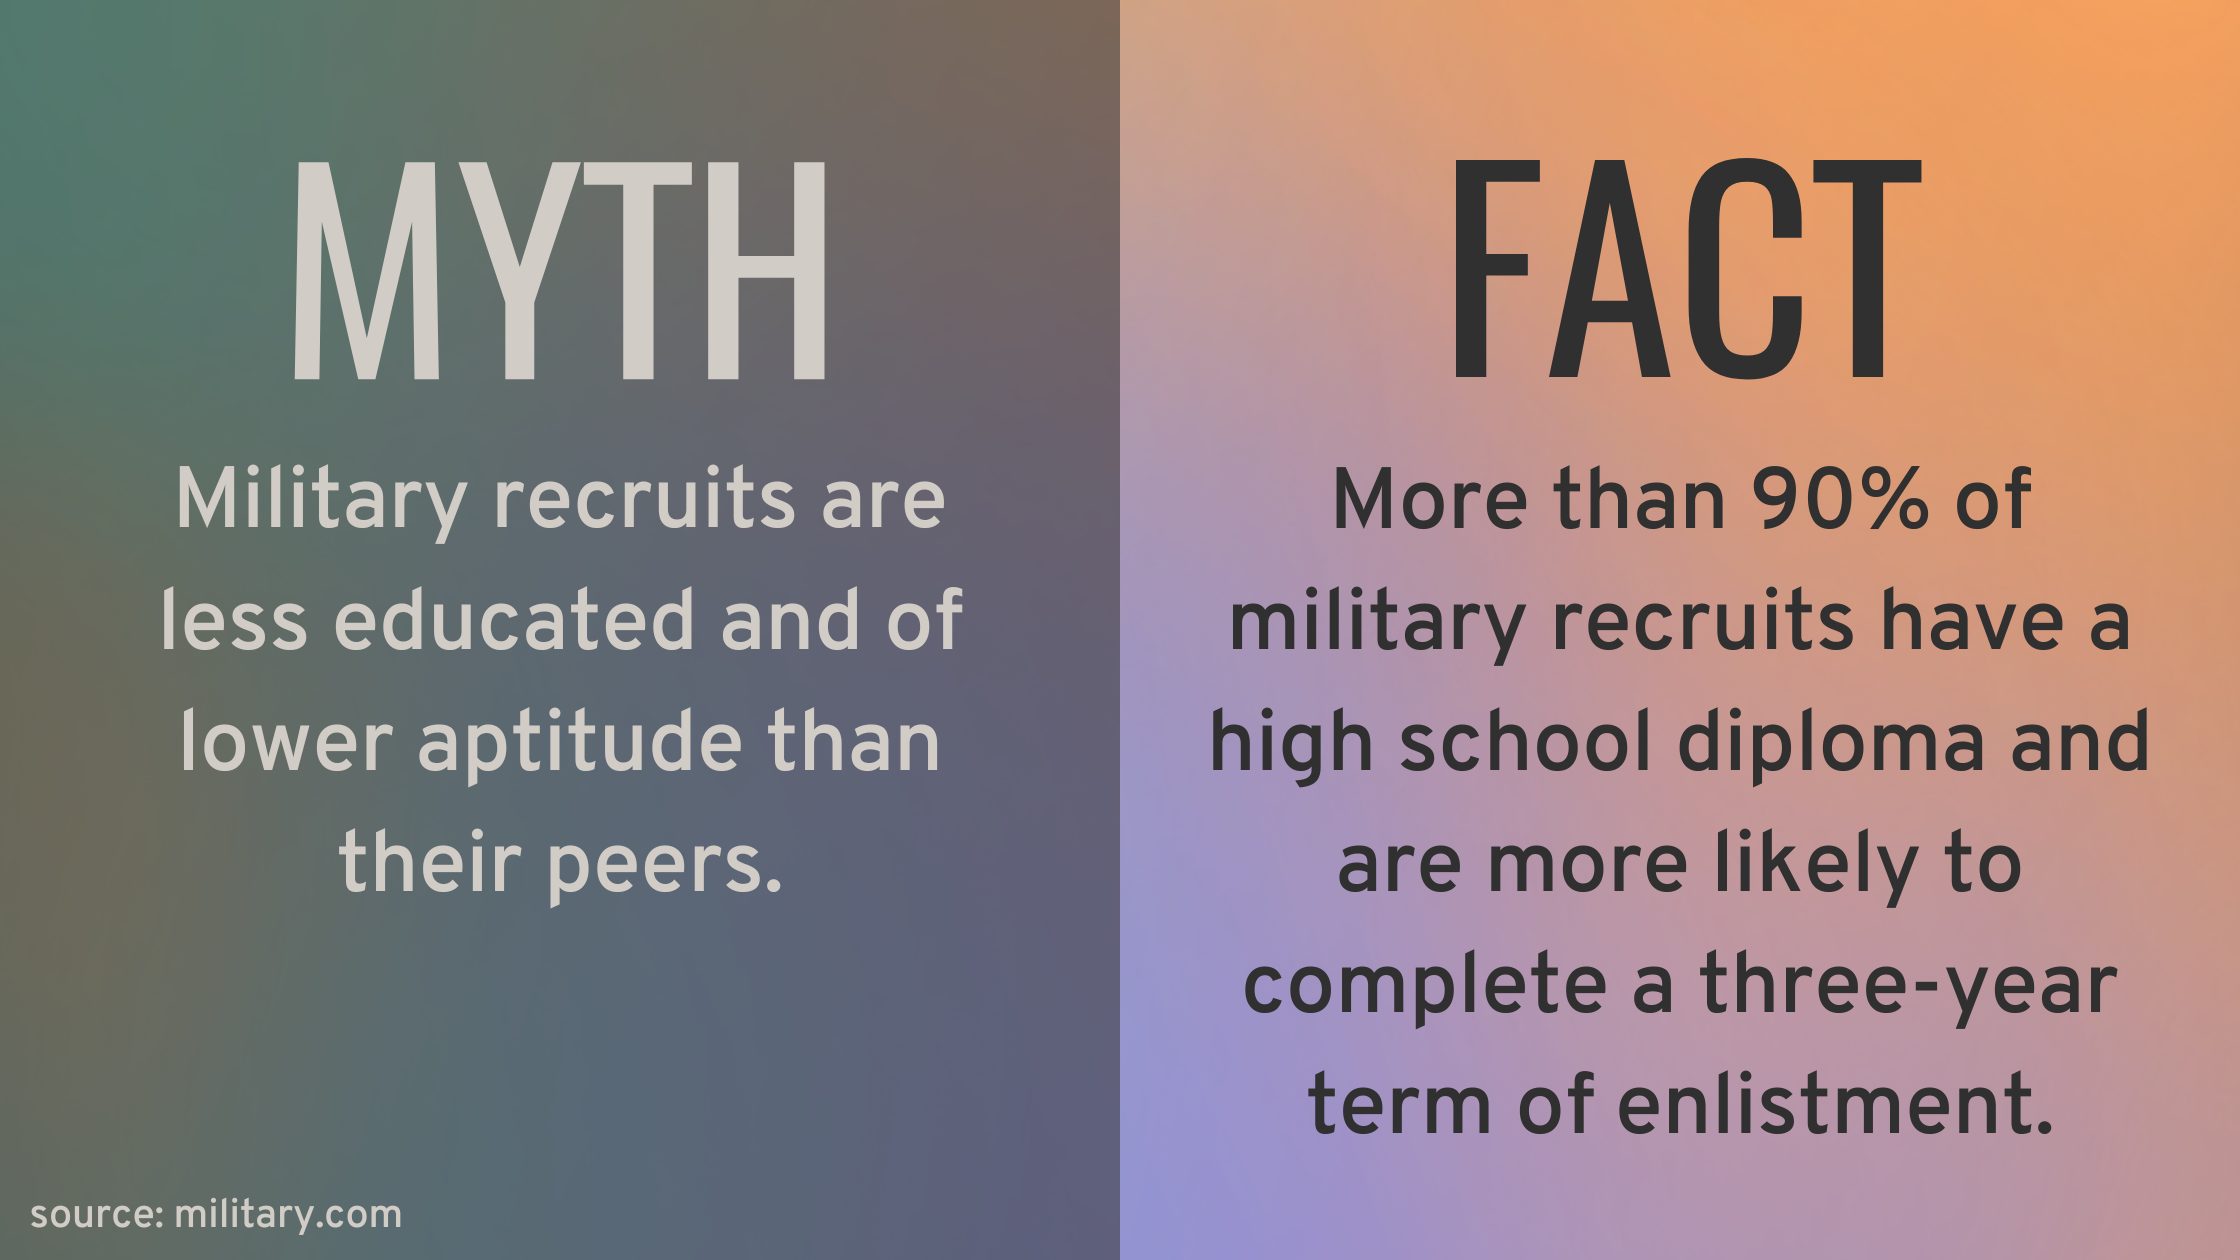 Military recruit education level myth vs. fact